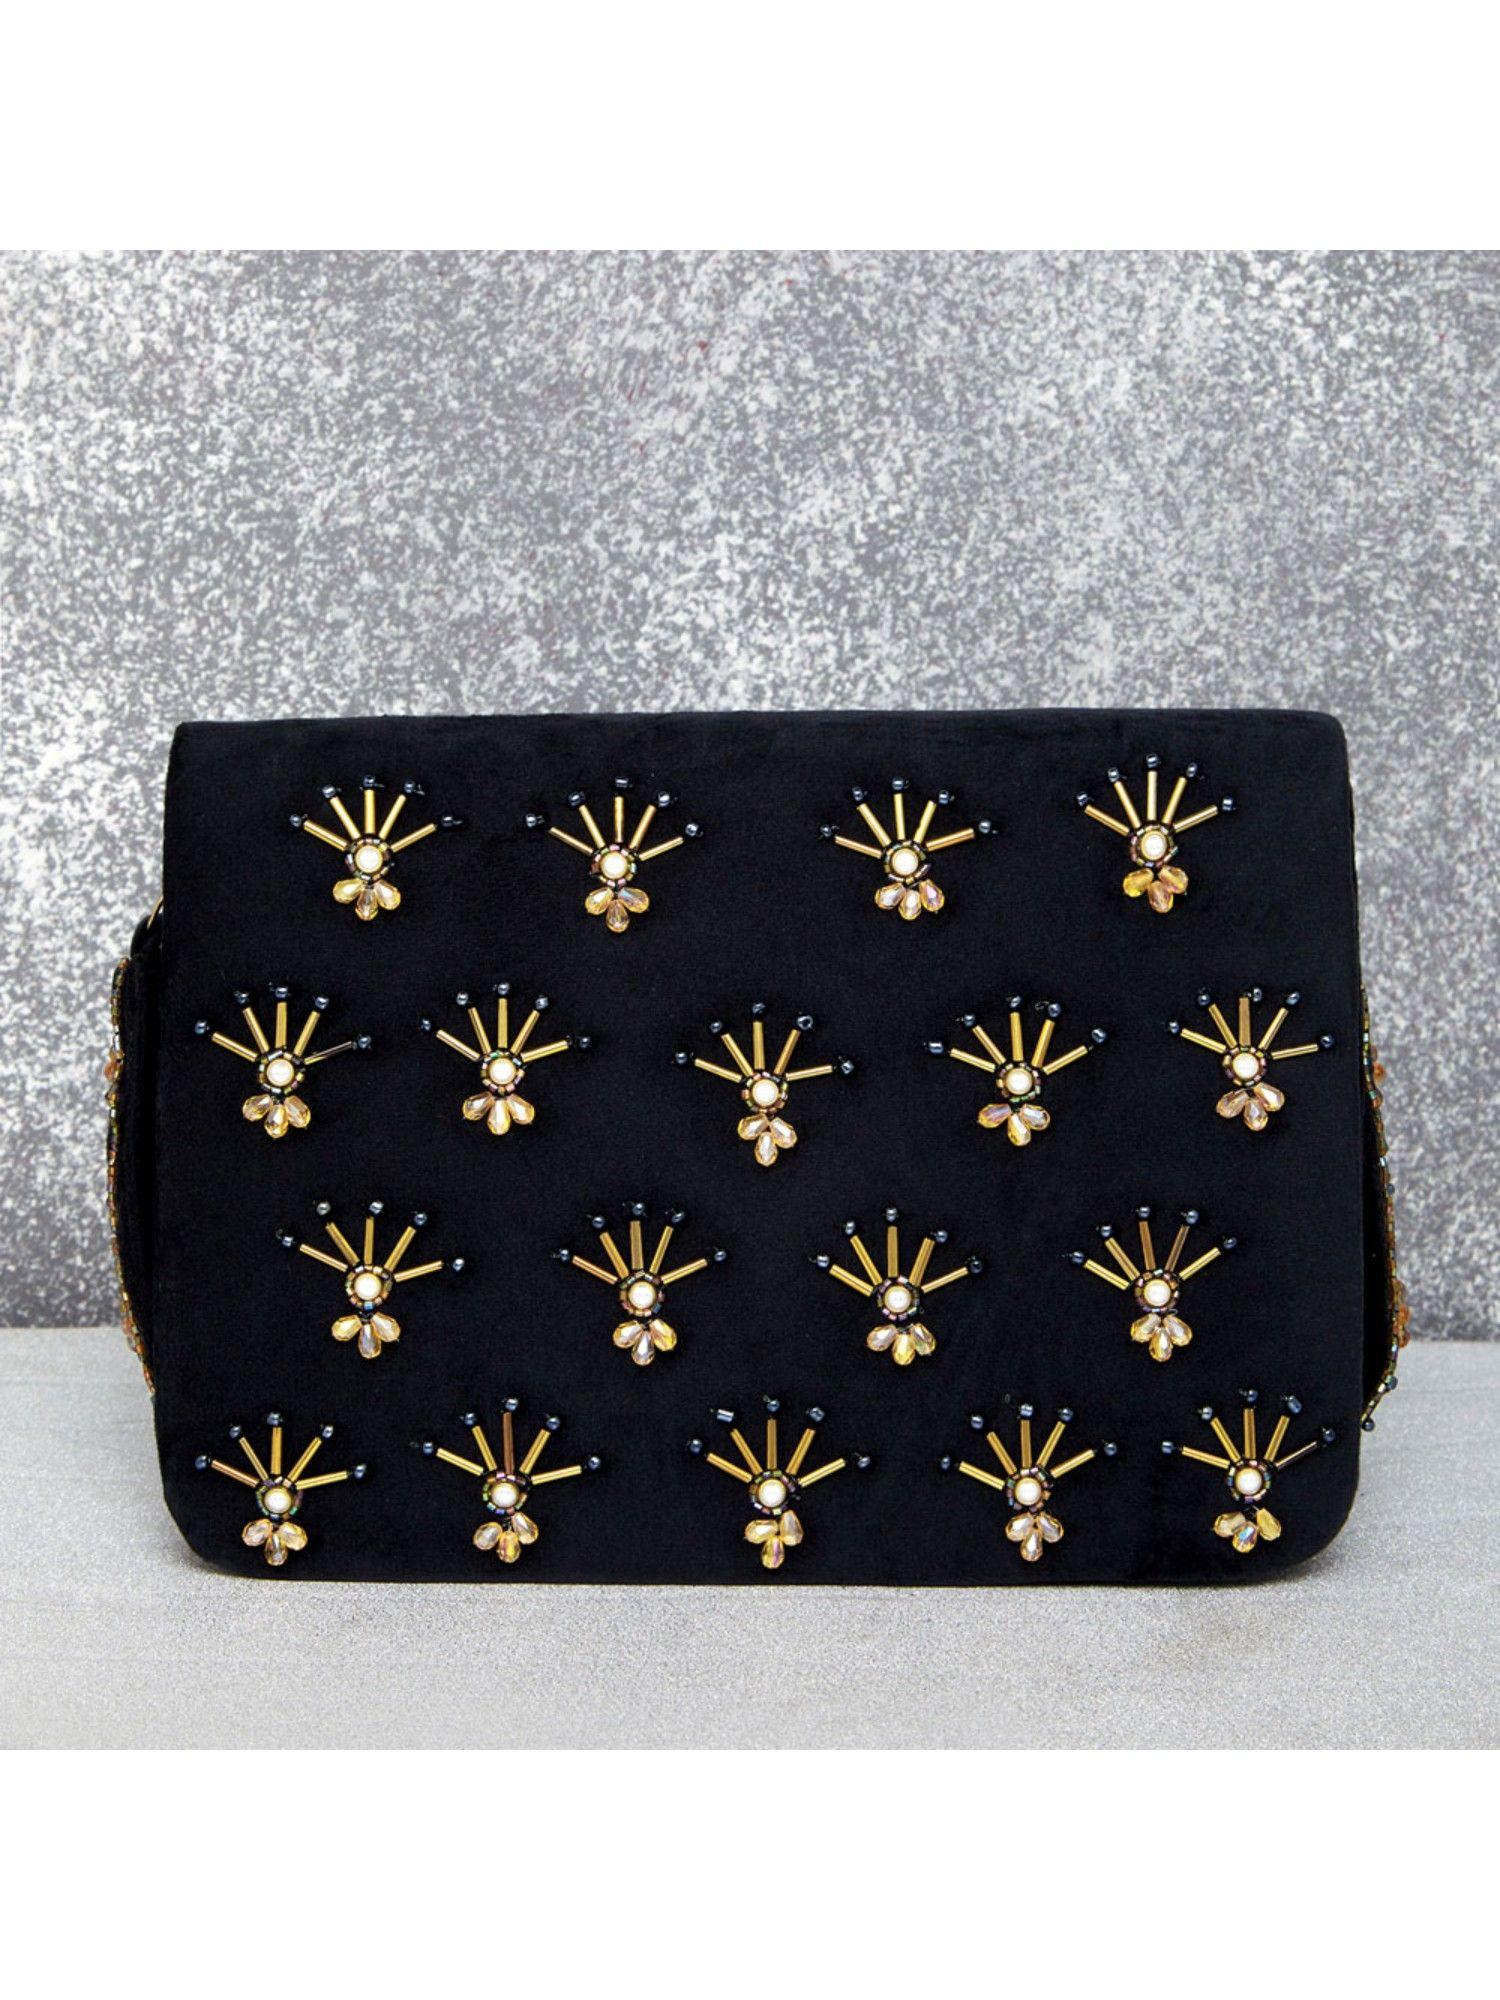 black clutch purses for women handmade evening bridal clutch - c86bl